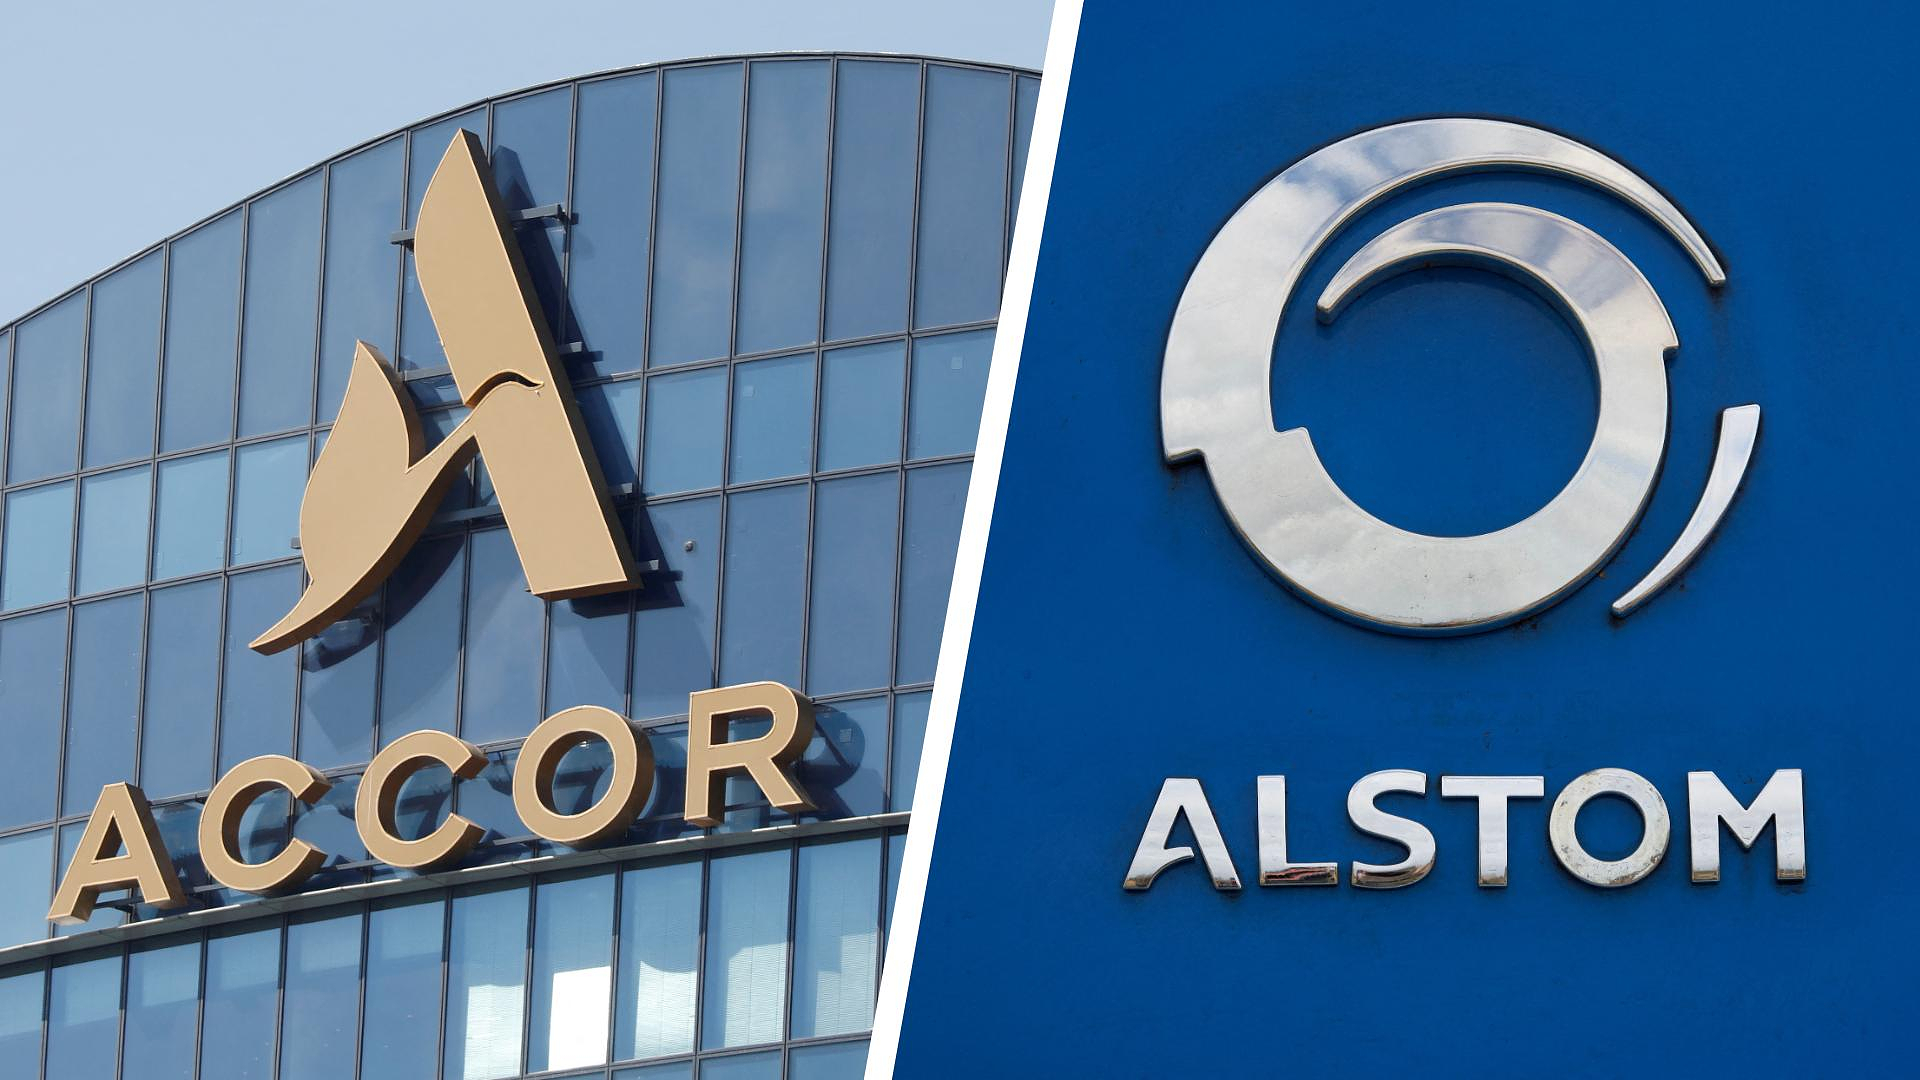 Paris Stock Exchange: Accor returns to the CAC 40, Alstom leaves